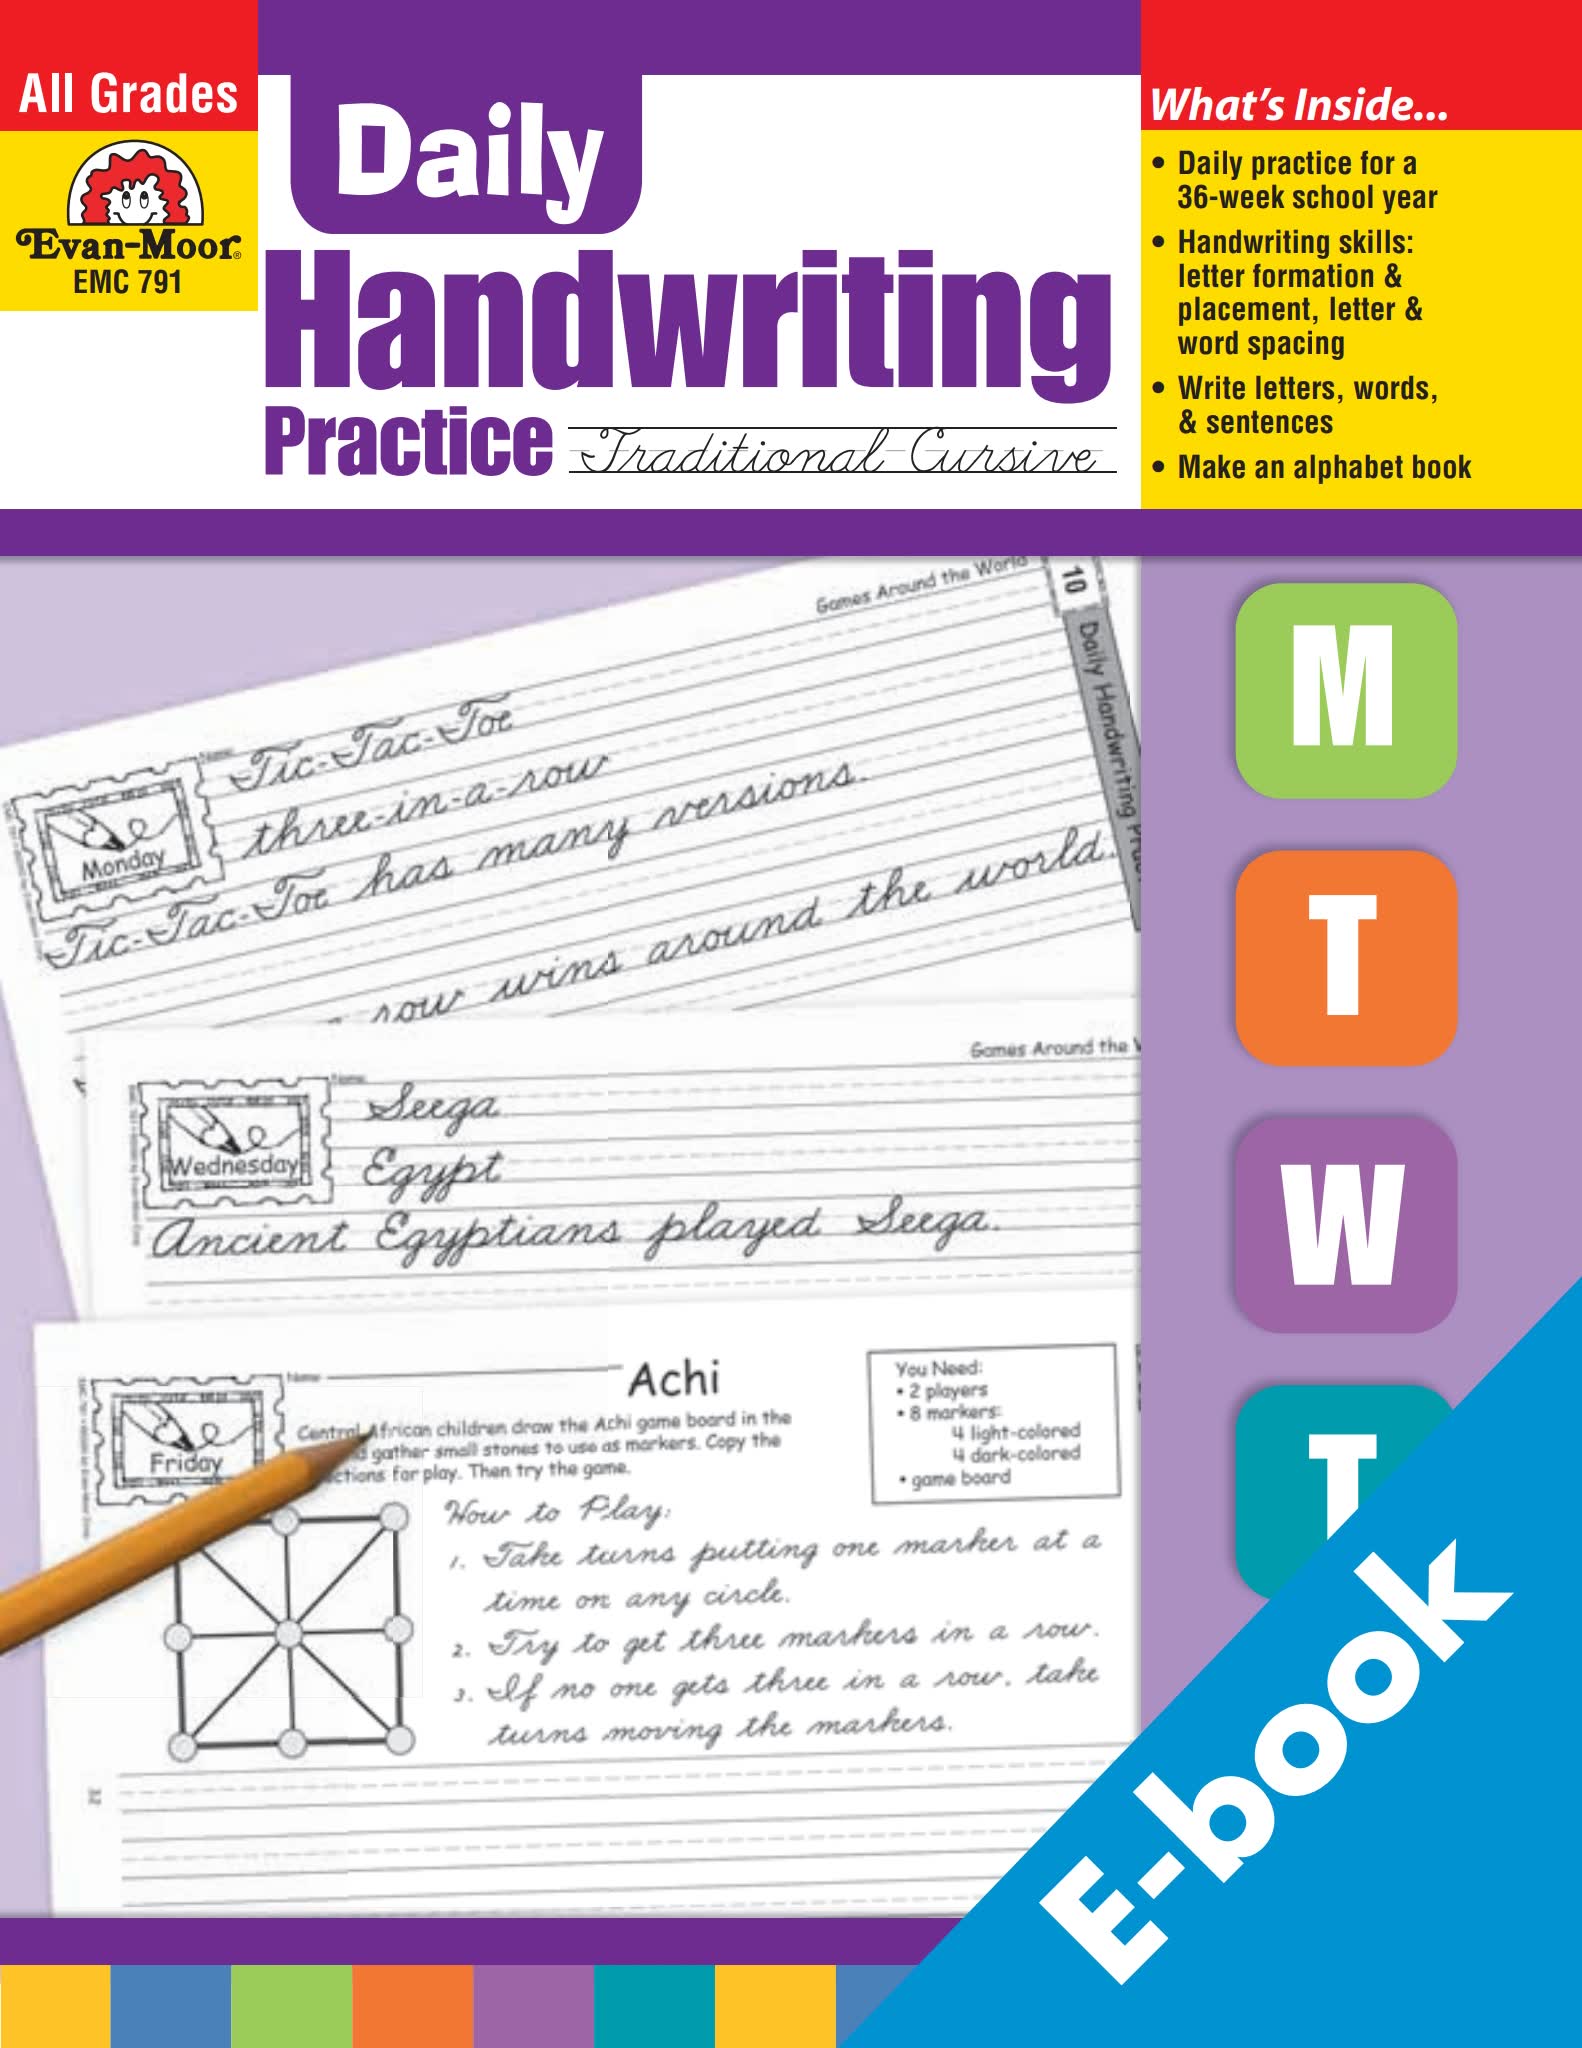 Daily-Handwriting-Practice0